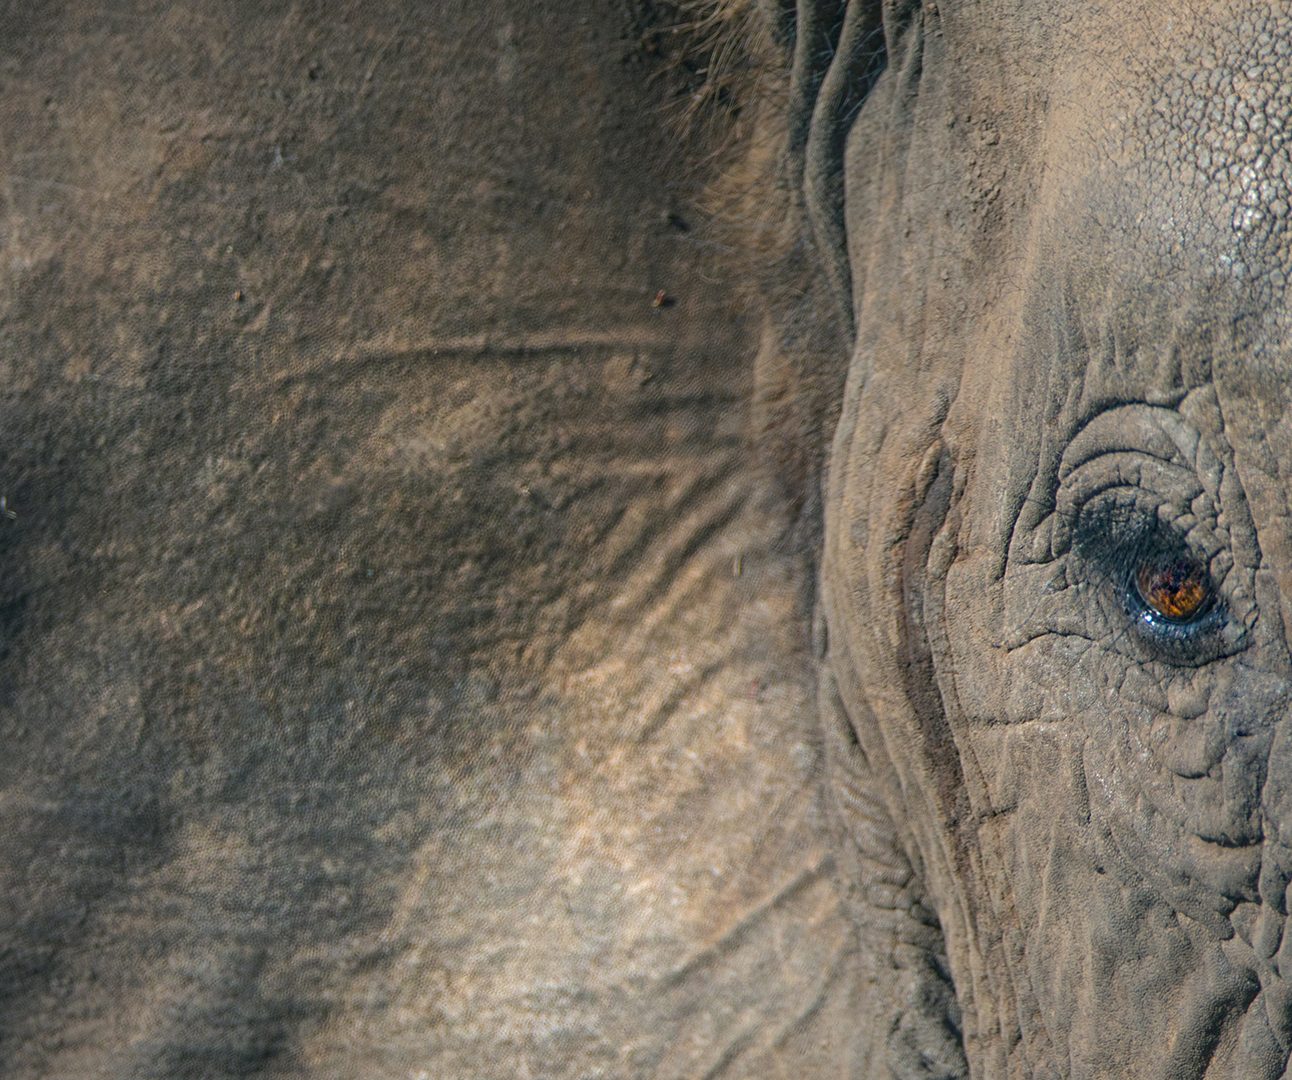 Close up of an elephant's eye